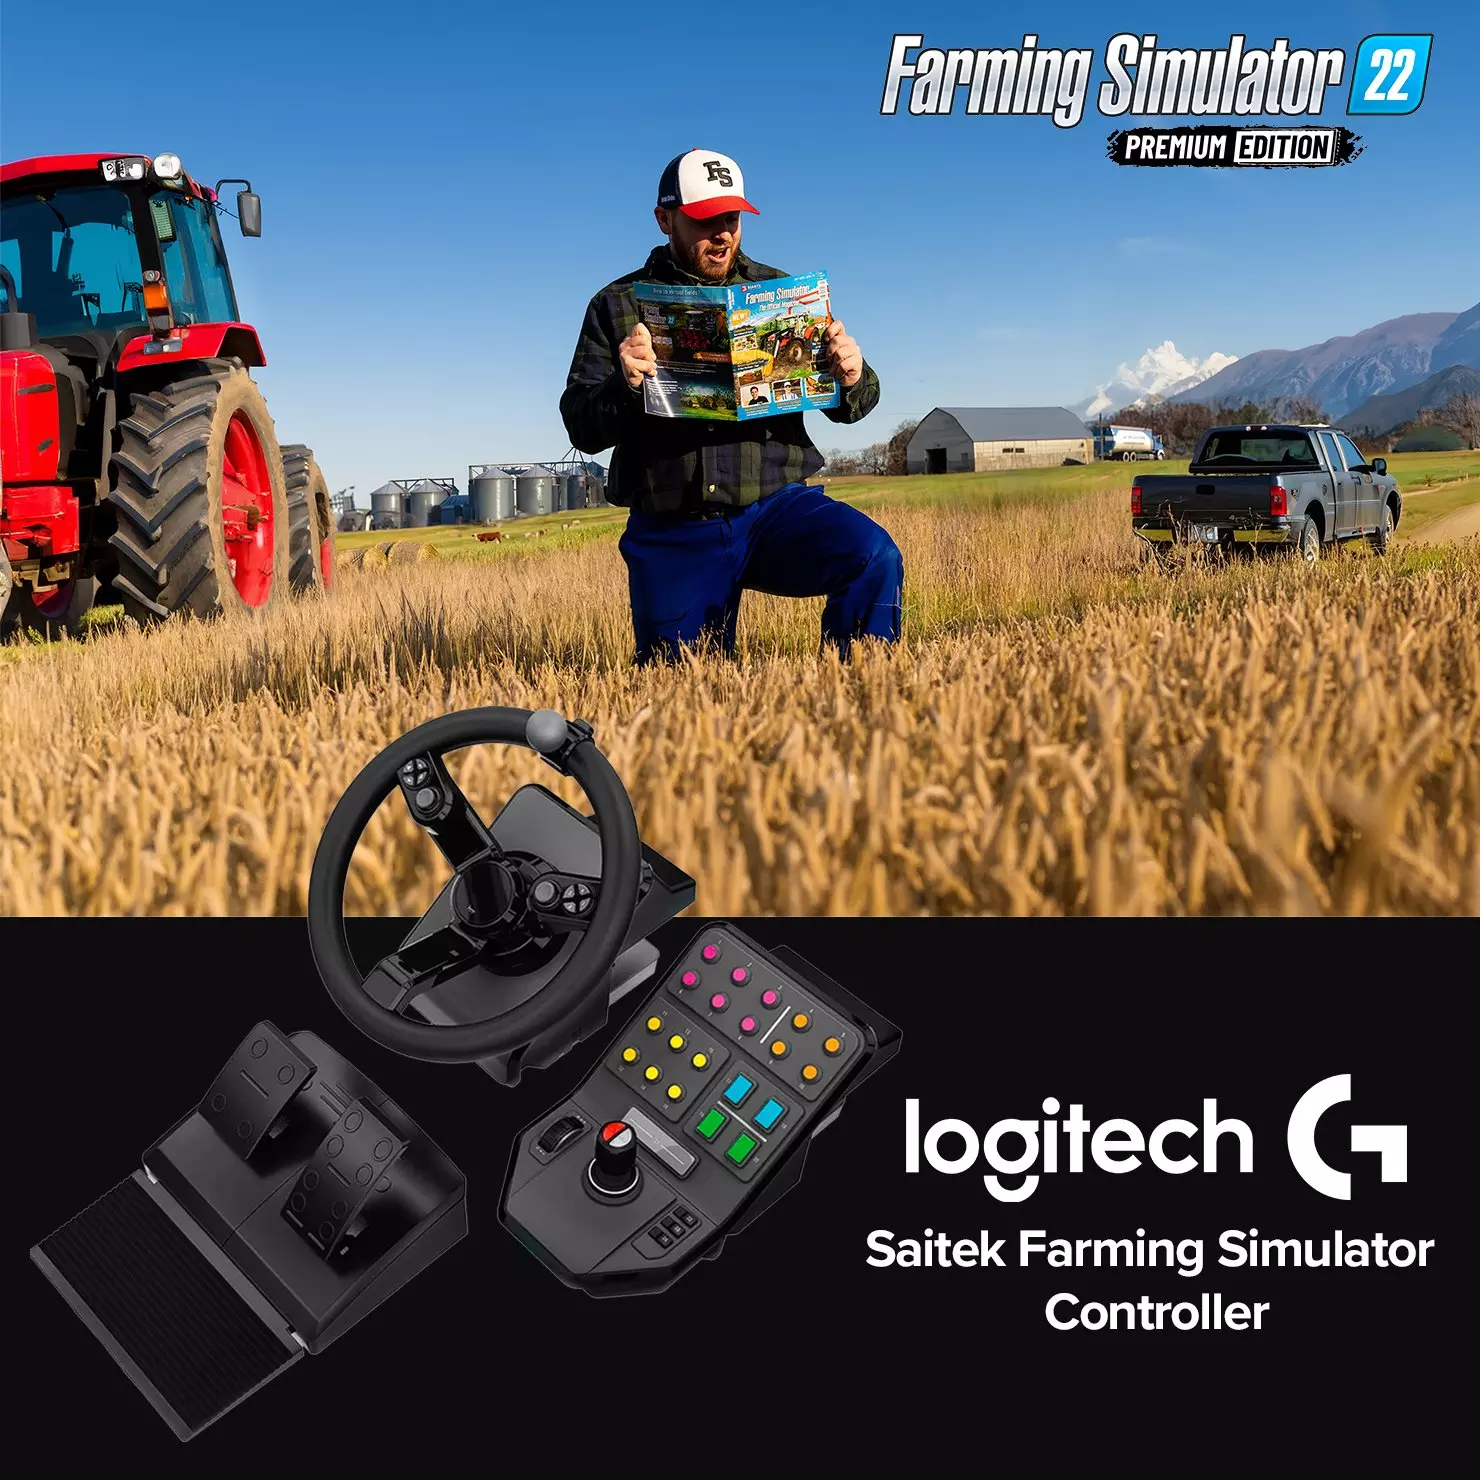 Logitech G Saitek Farming Simulator Controller